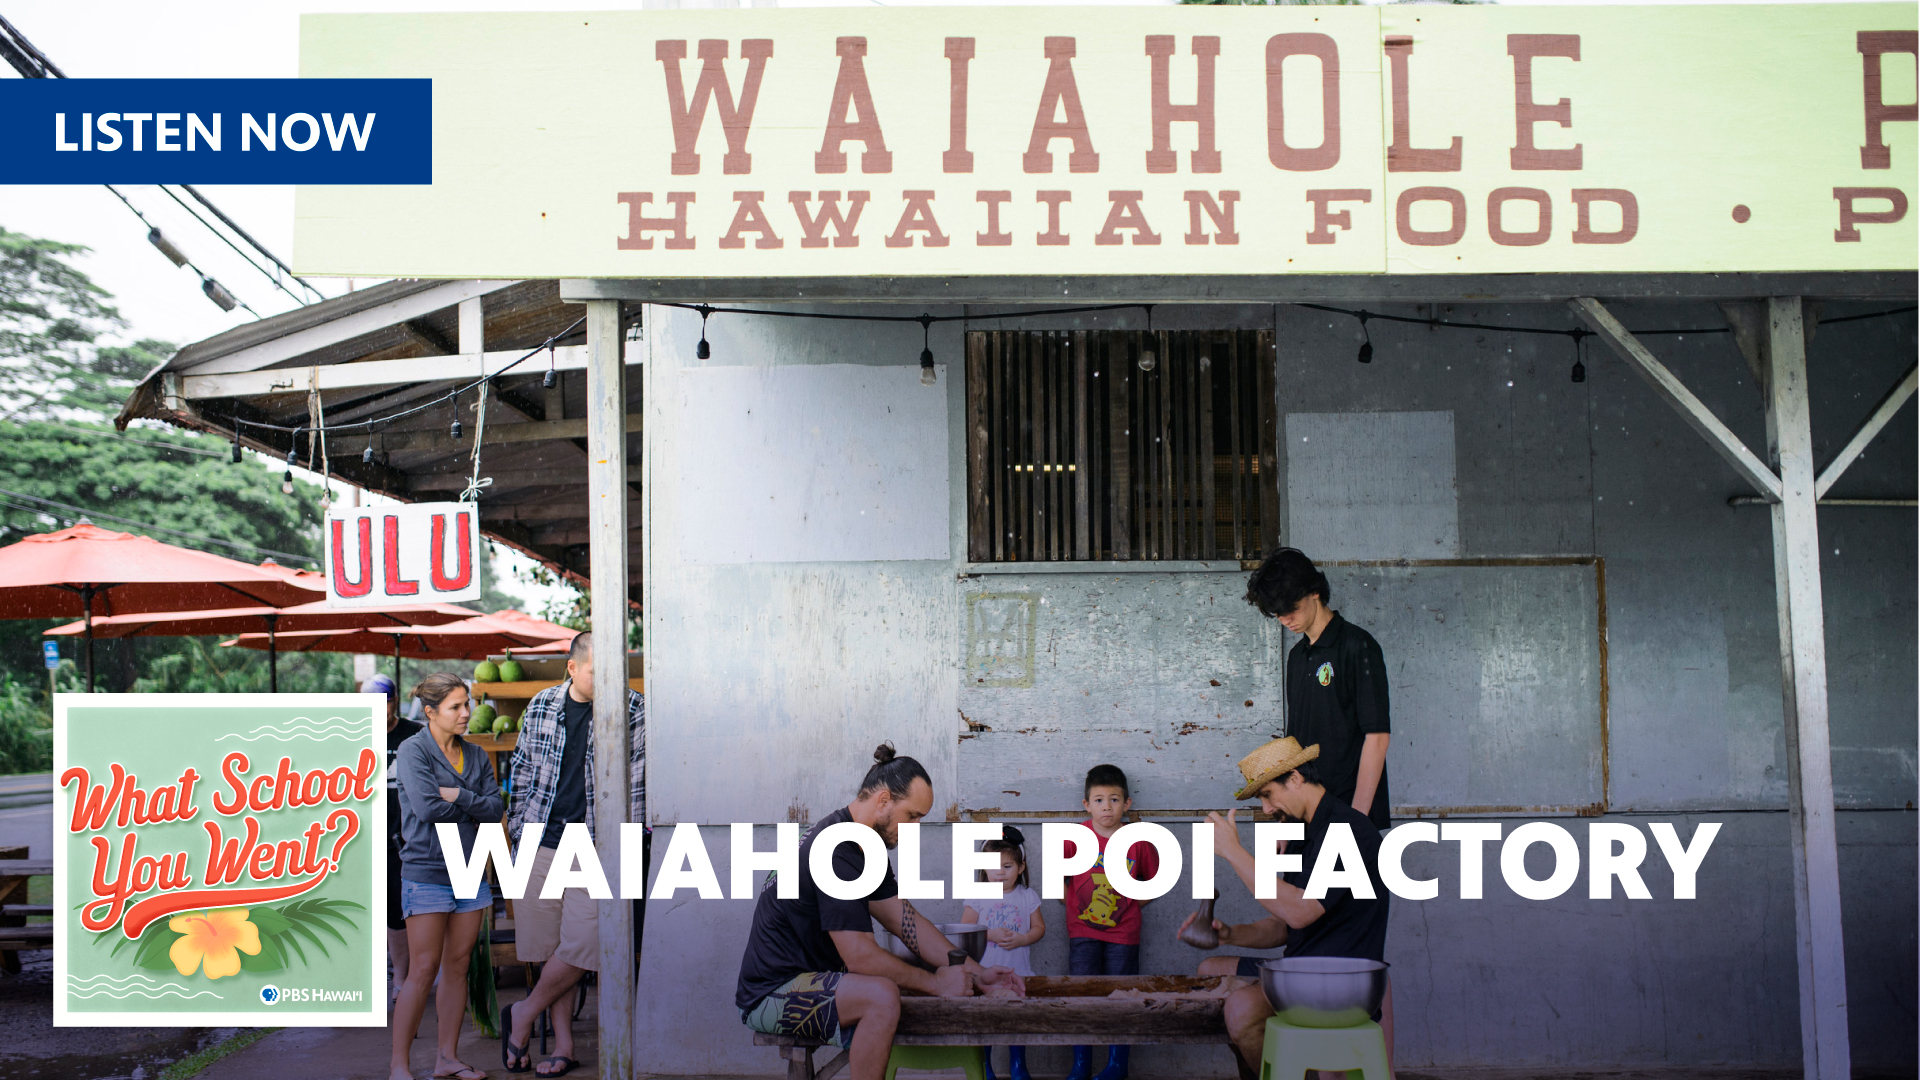 WHAT SCHOOL YOU WENT? <br/>Waiahole Poi Factory